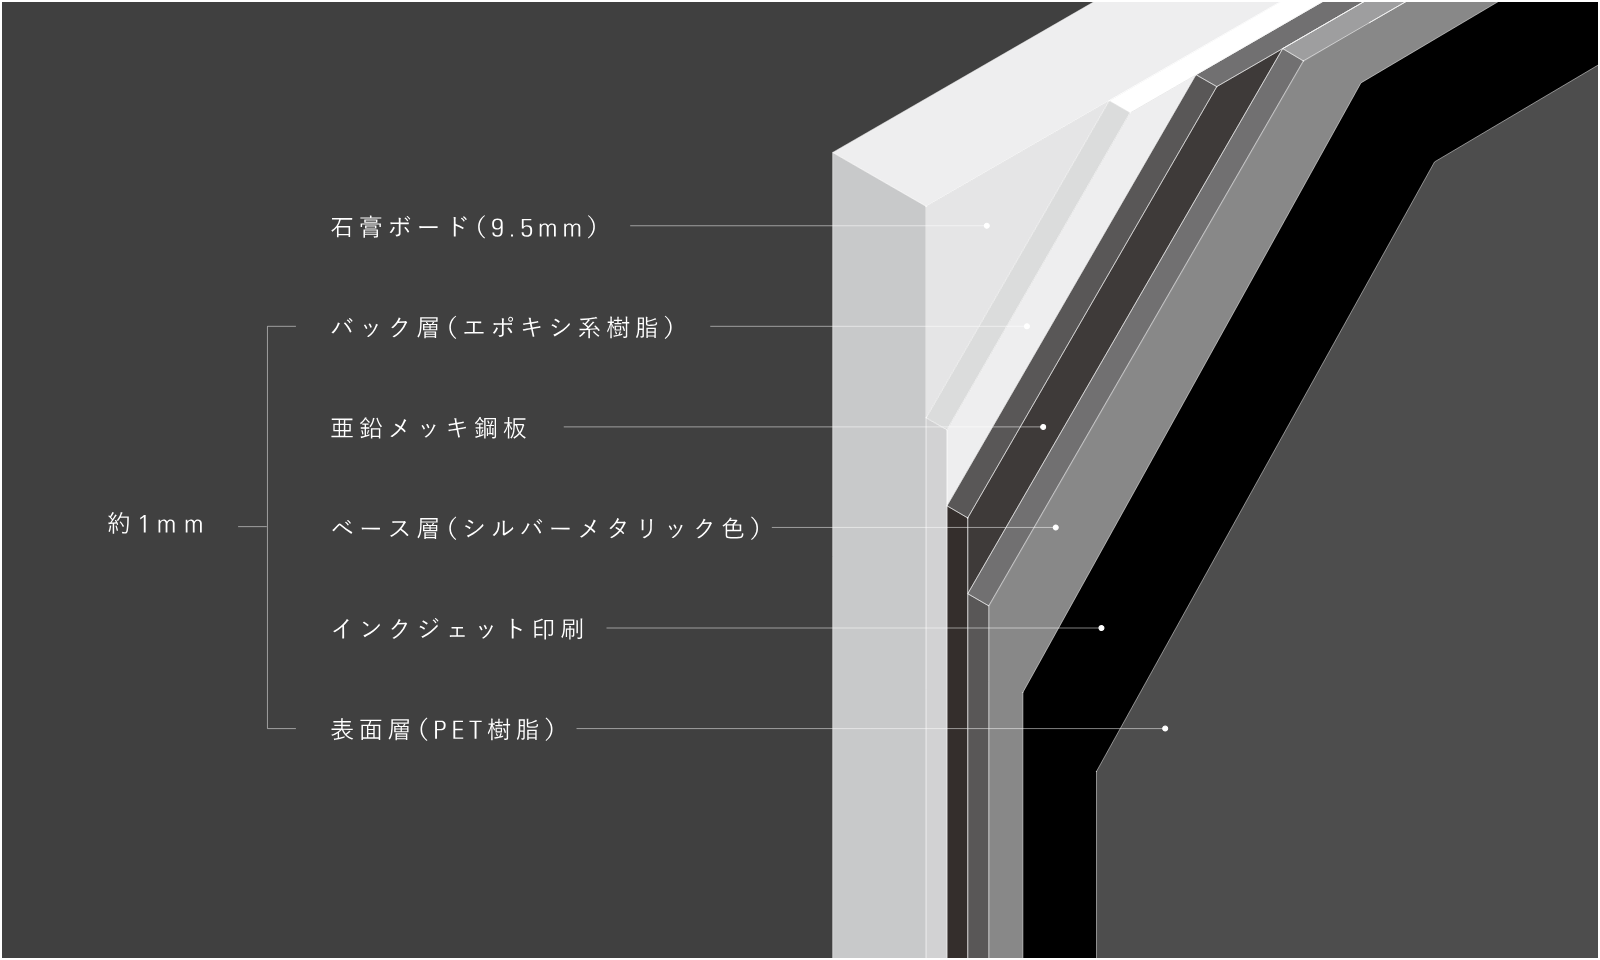 REFLECT PANELの断面構造イメージ図